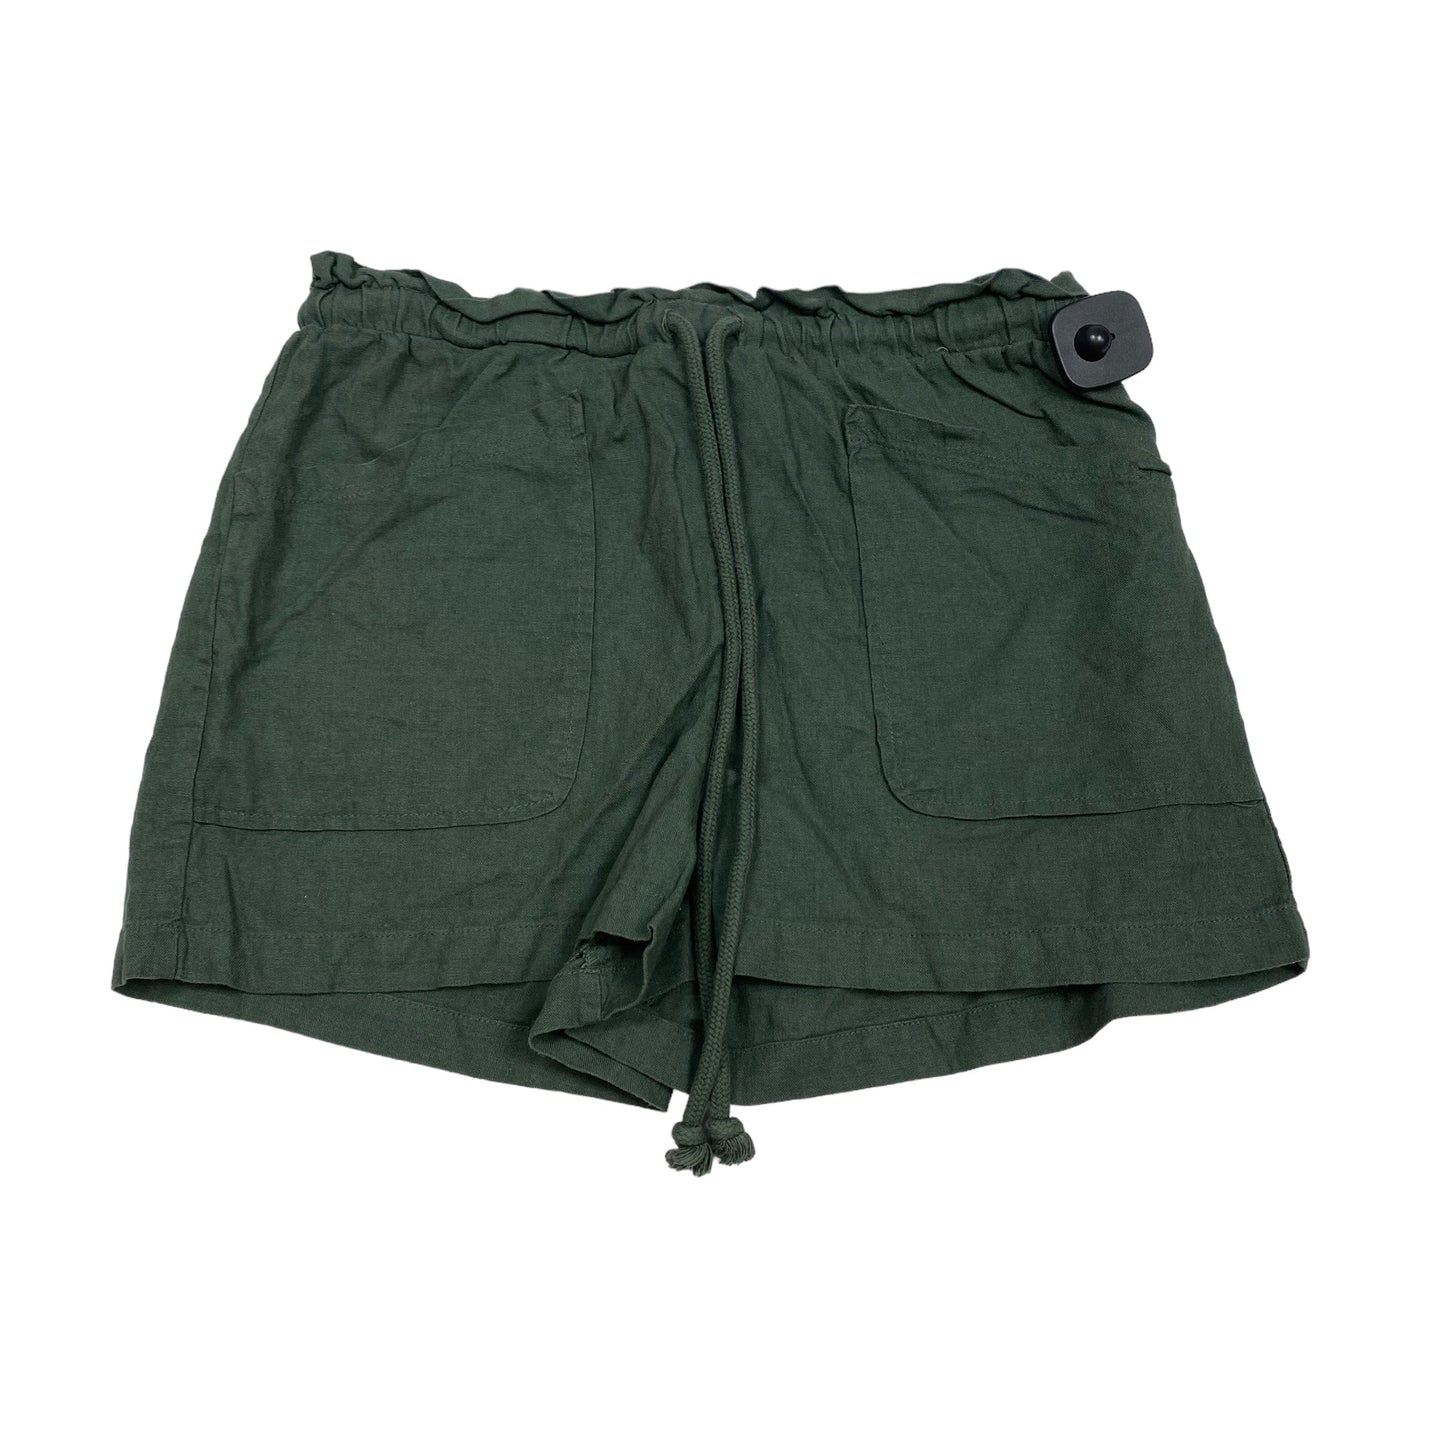 Green Shorts Universal Thread, Size M